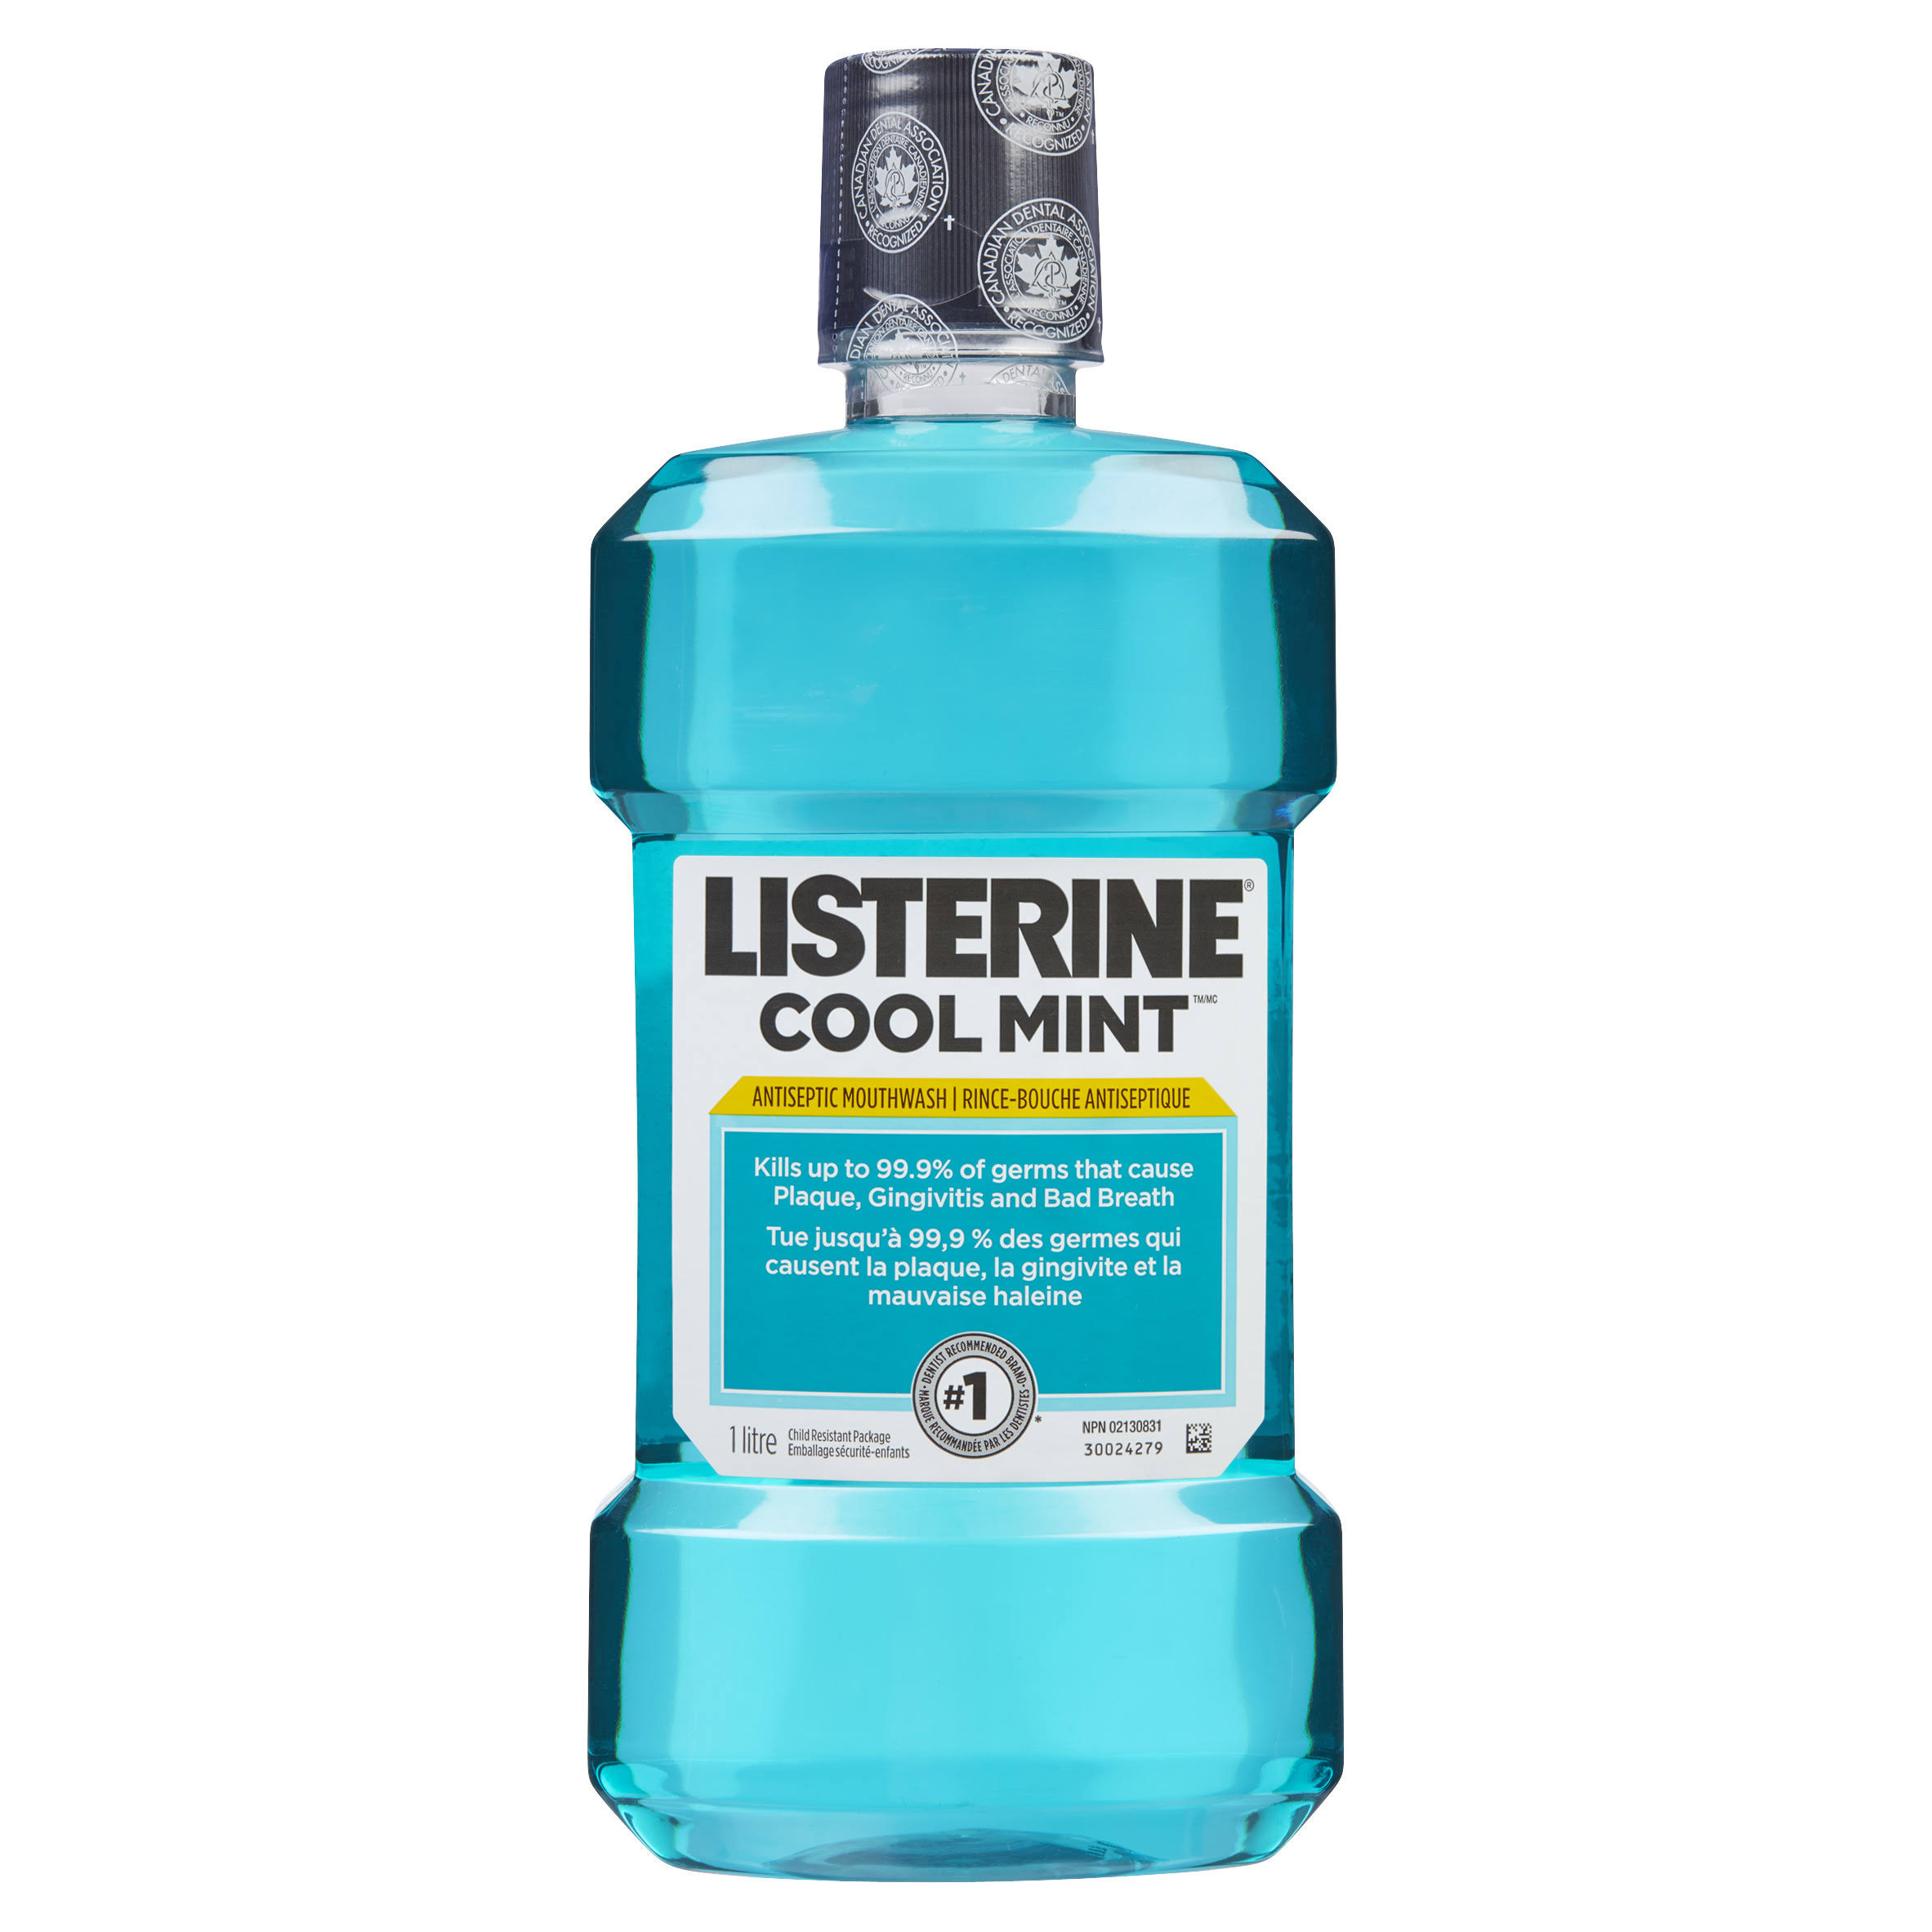 Listerine Antiseptic Mouthwash - Cool Mint, 1L